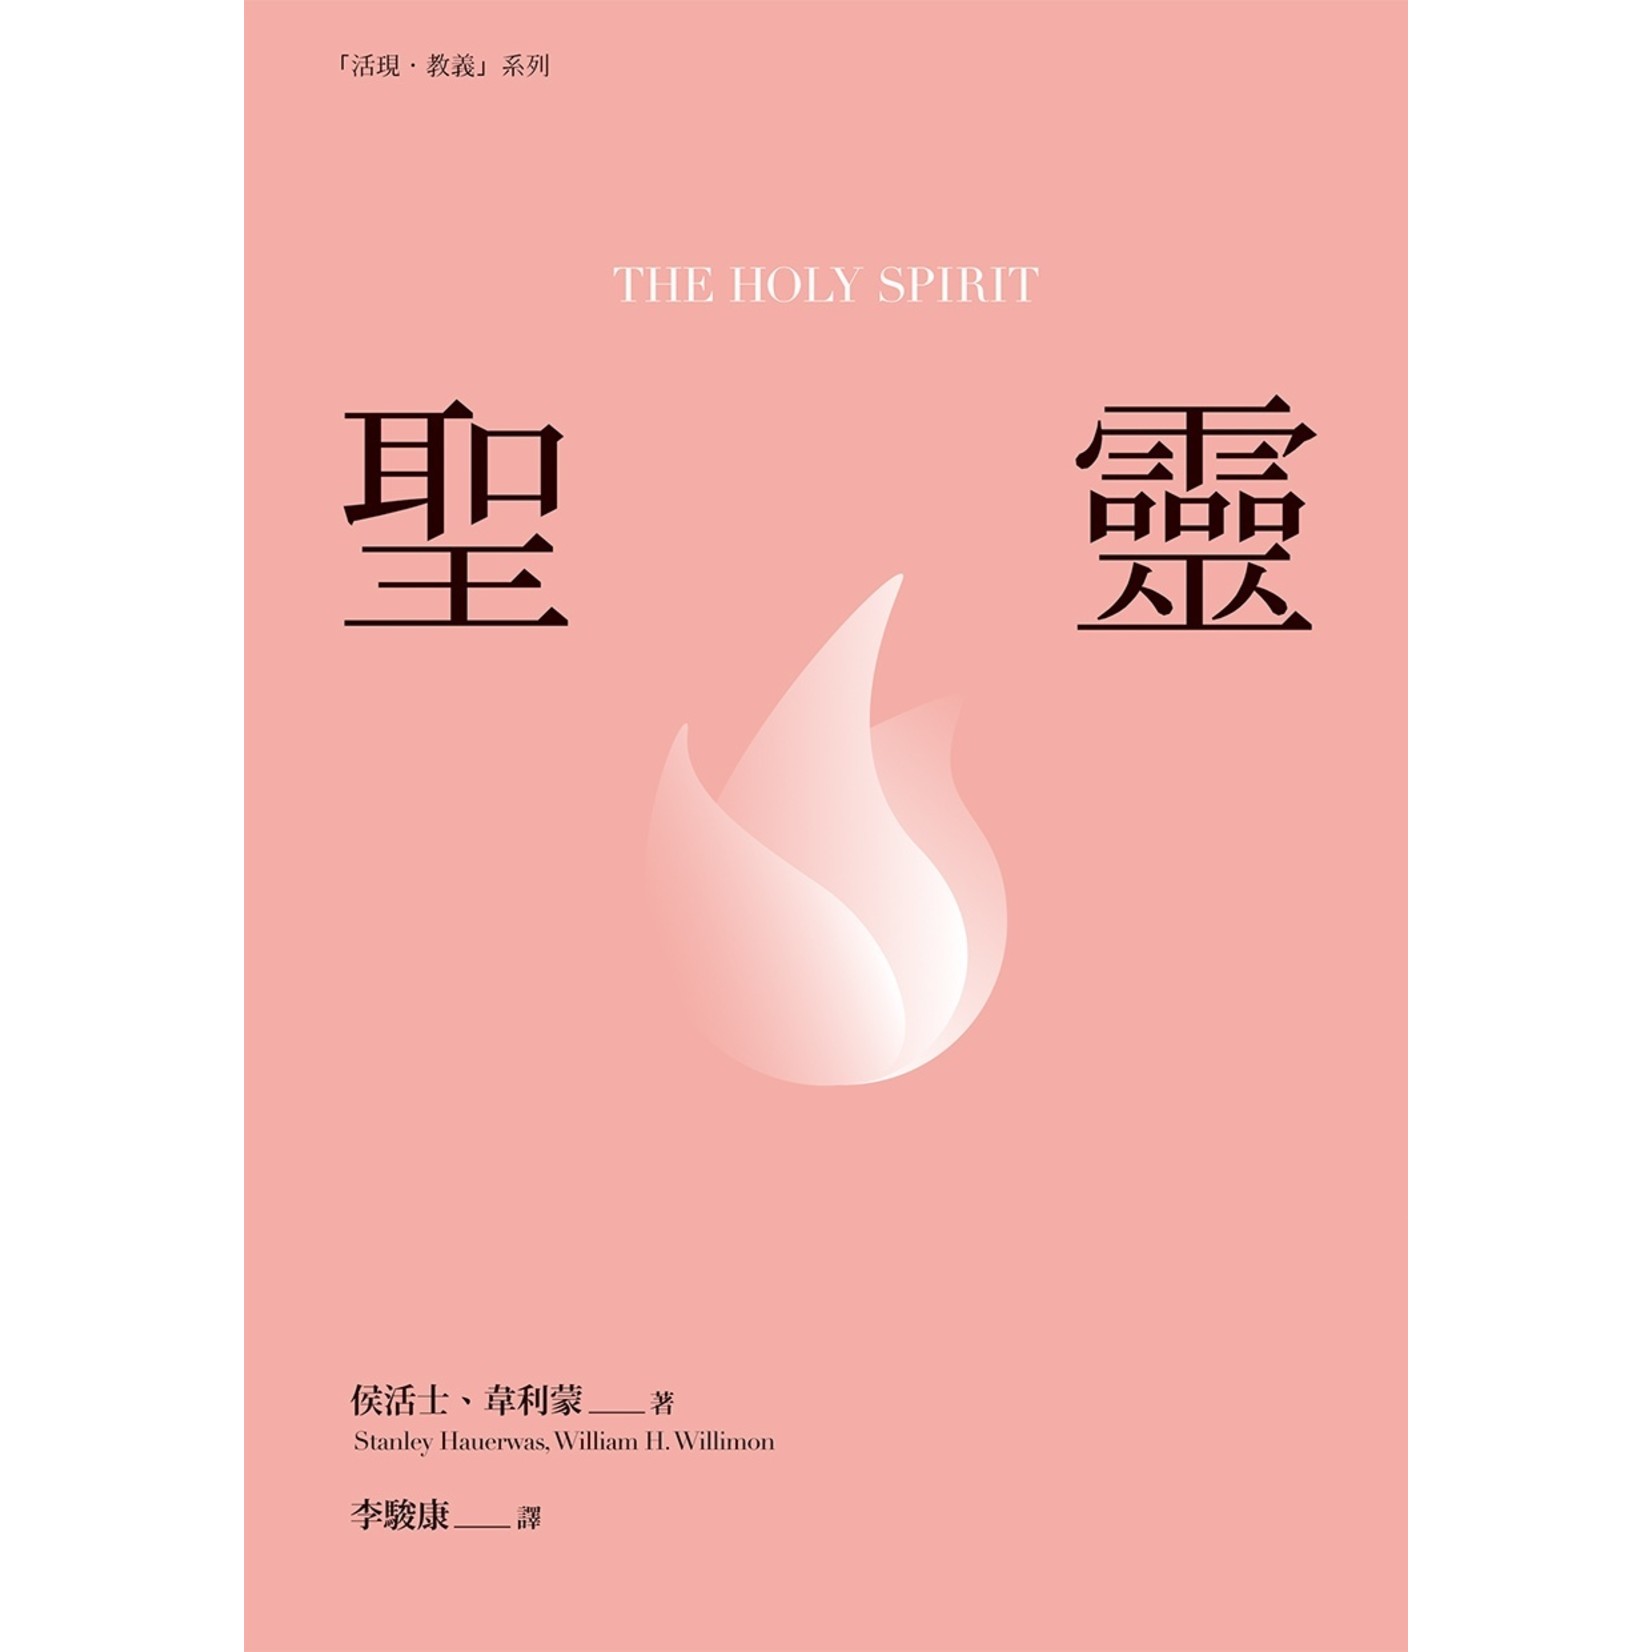 基督教文藝(香港) Chinese Christian Literature Council 聖靈 | The Holy Spirit